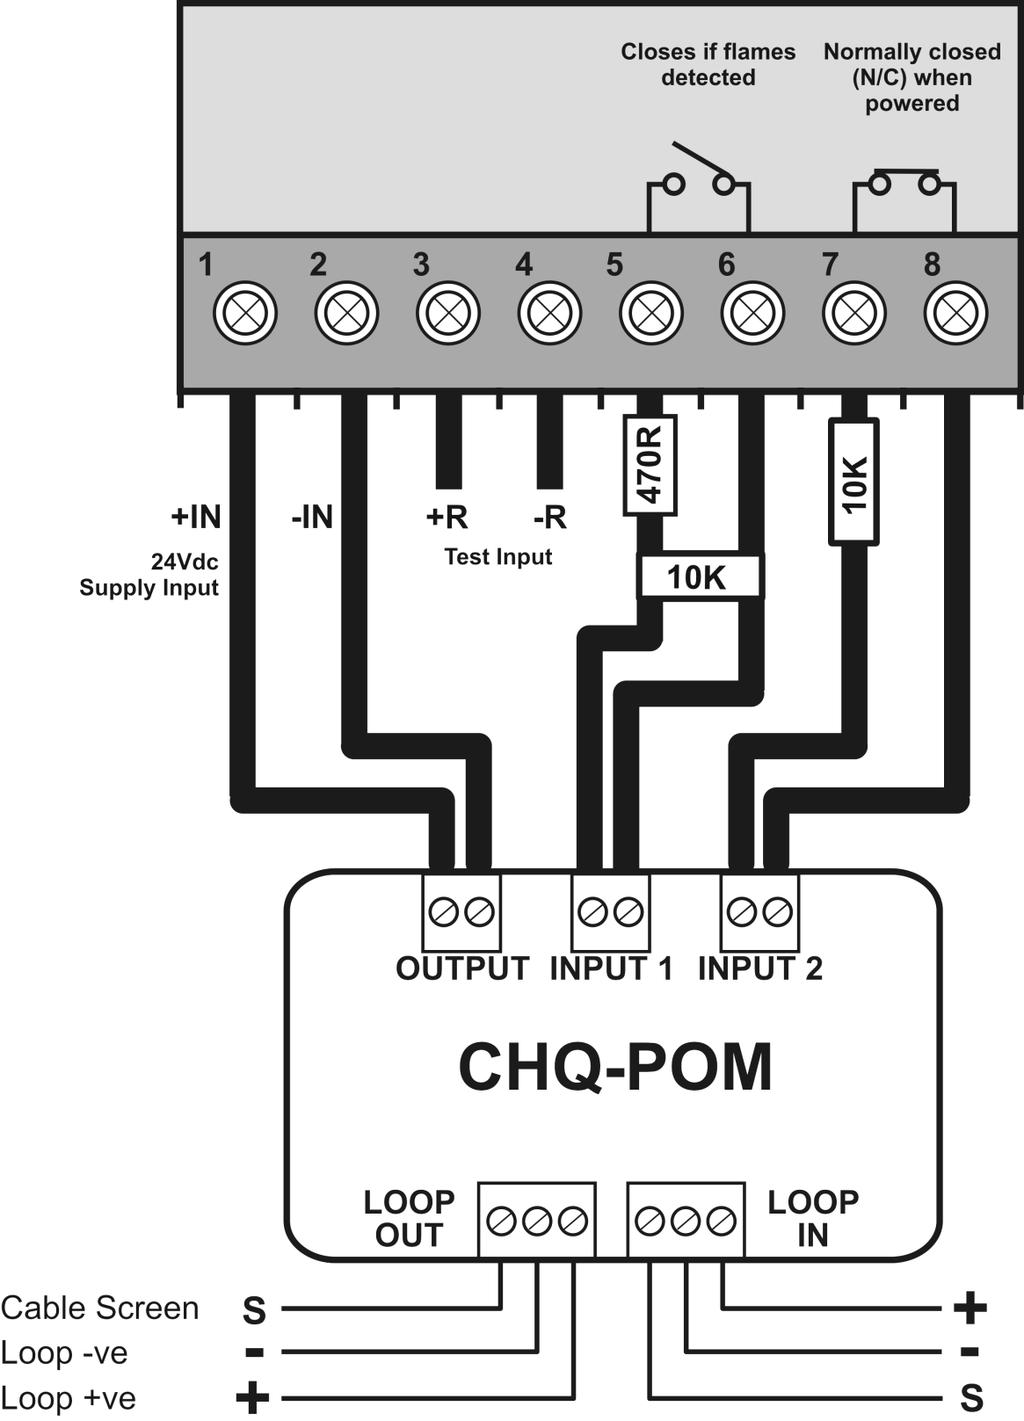 Hochiki Europe (UK) Ltd 13 Fig 12 Connection Diagram using a CHQ-POM Powered